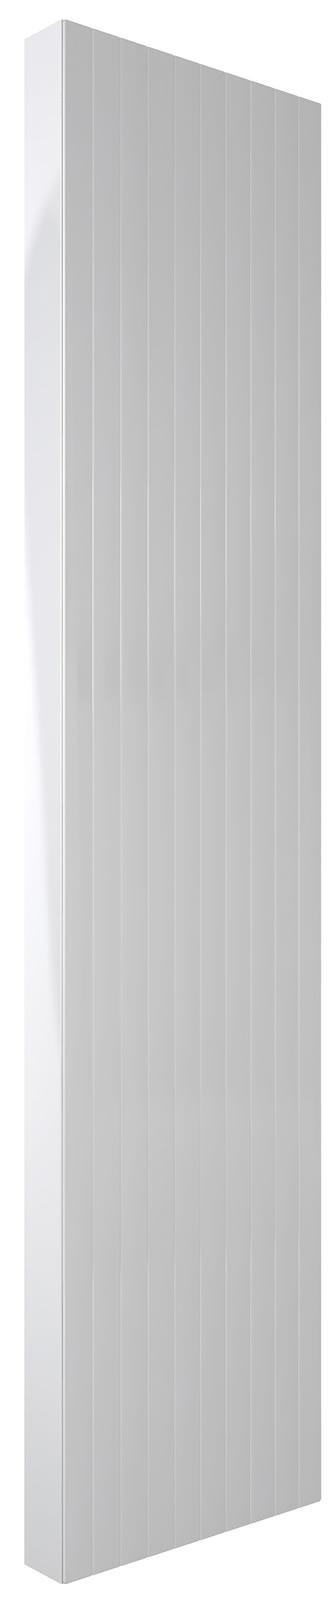 Stelrad Vita Deco Vertical radiator loyalty reward